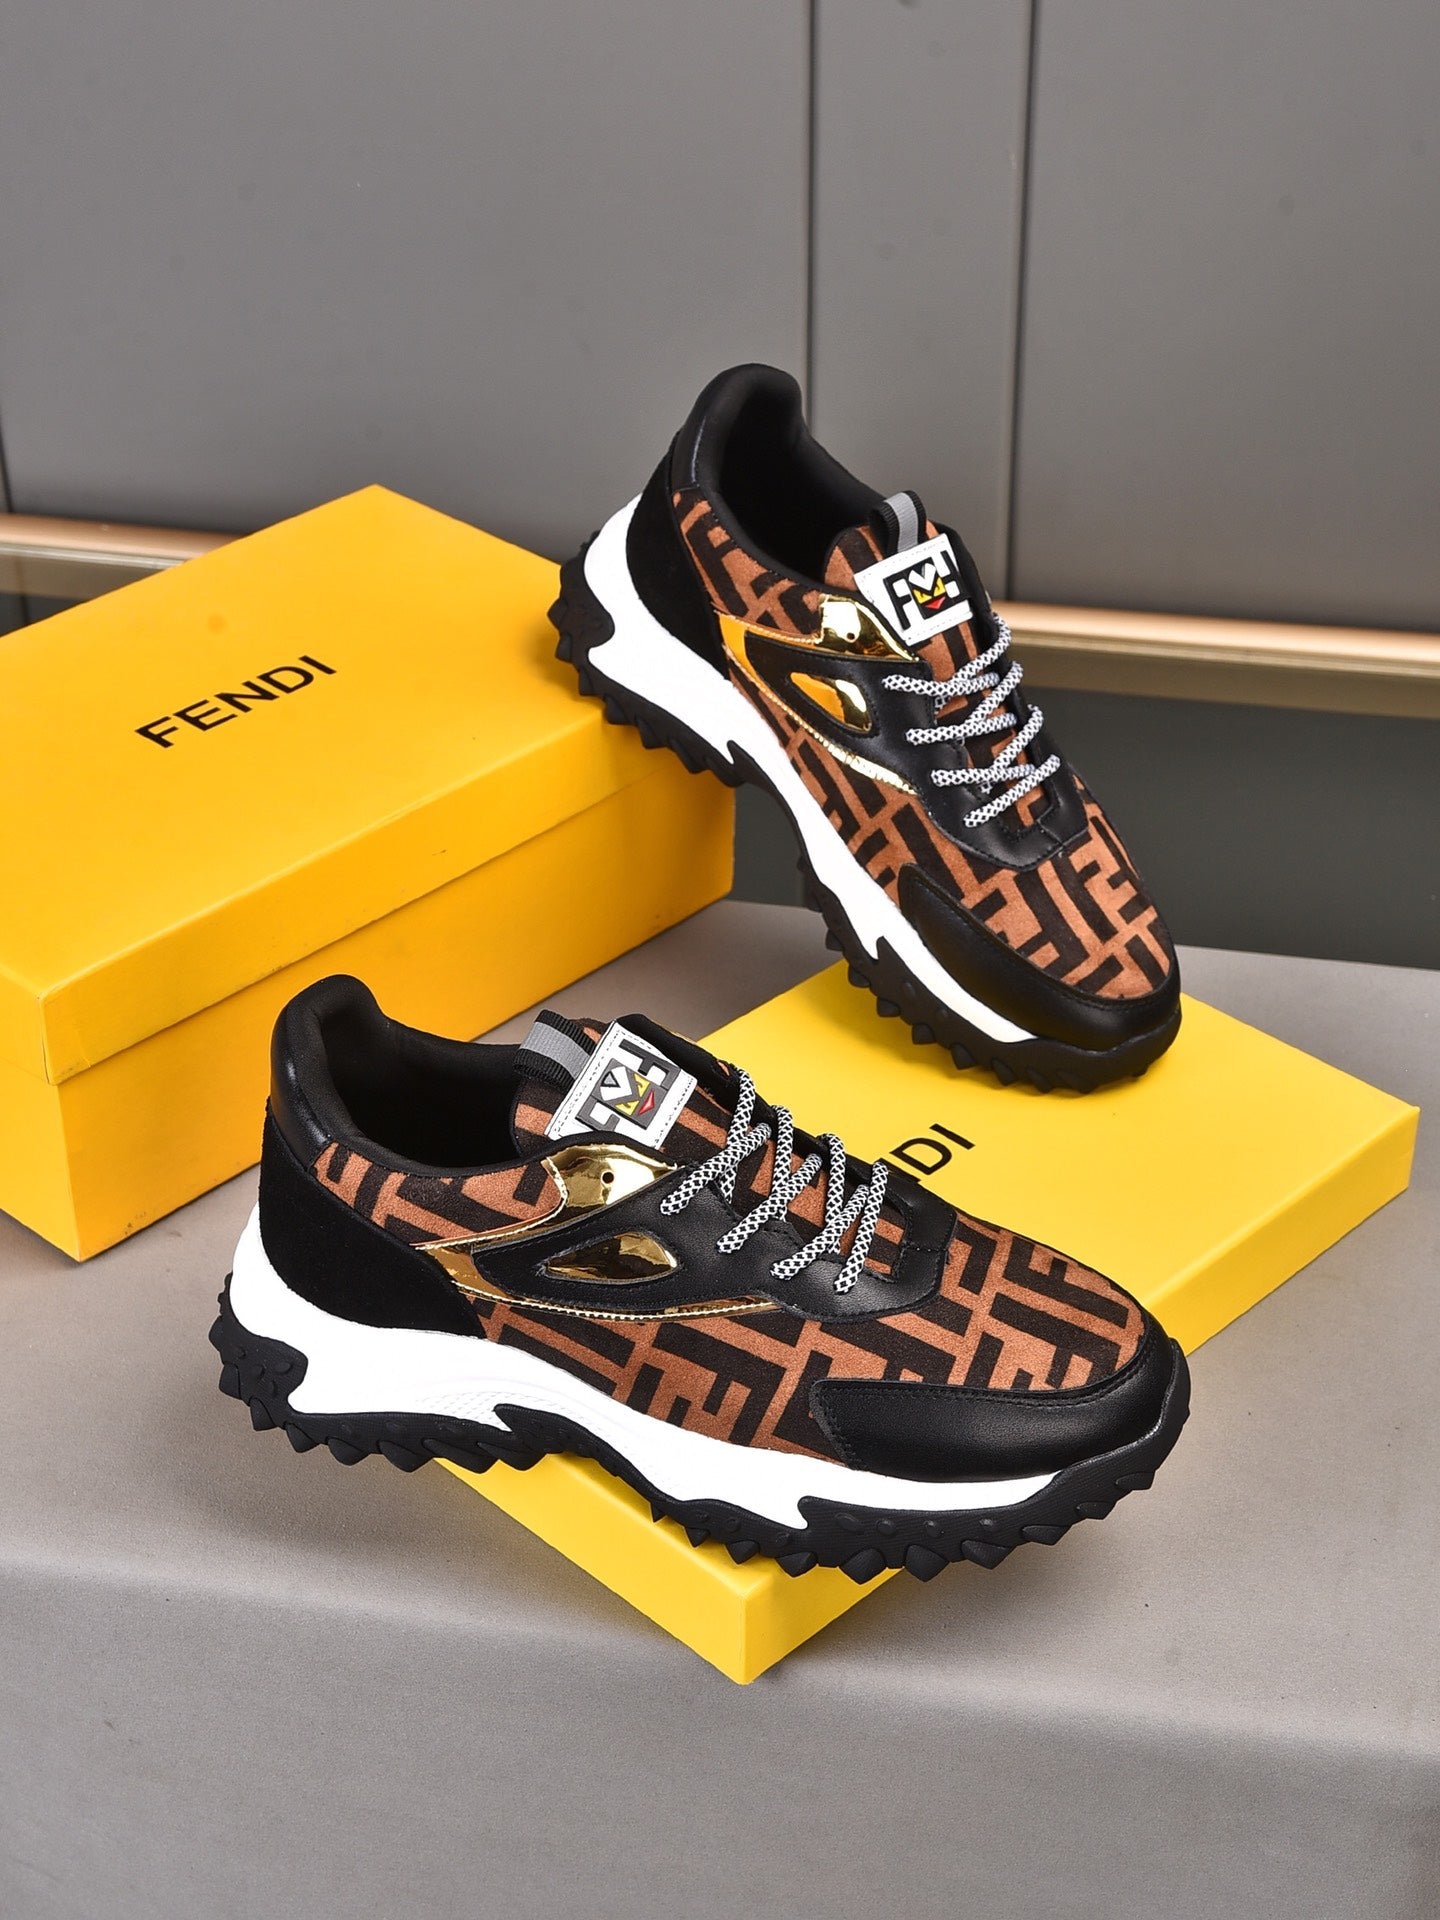 FENDI  Woman's Men's 2021 New Fashion Casual Shoes Sneaker Sport Running Shoes 11120gh